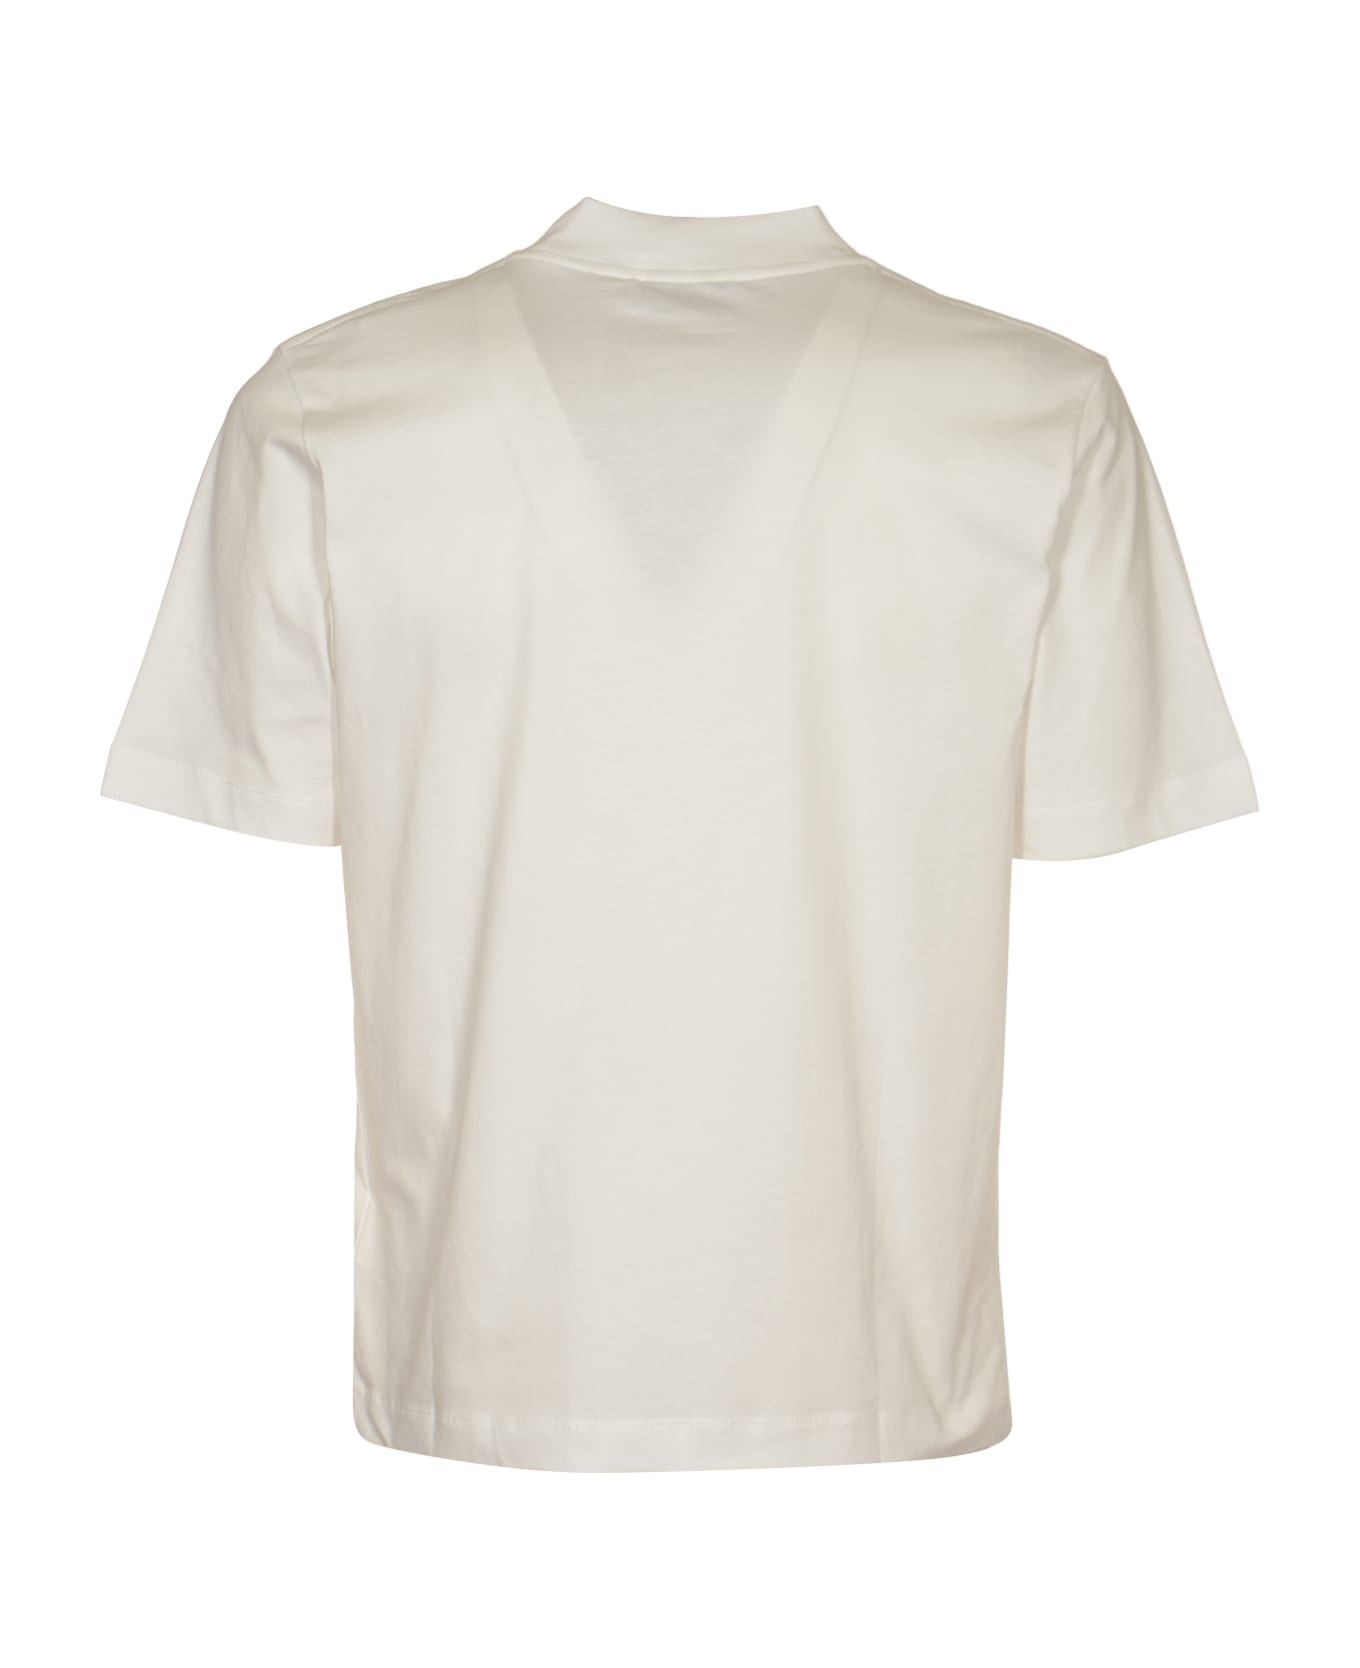 Études Award Accent T-shirt - White シャツ